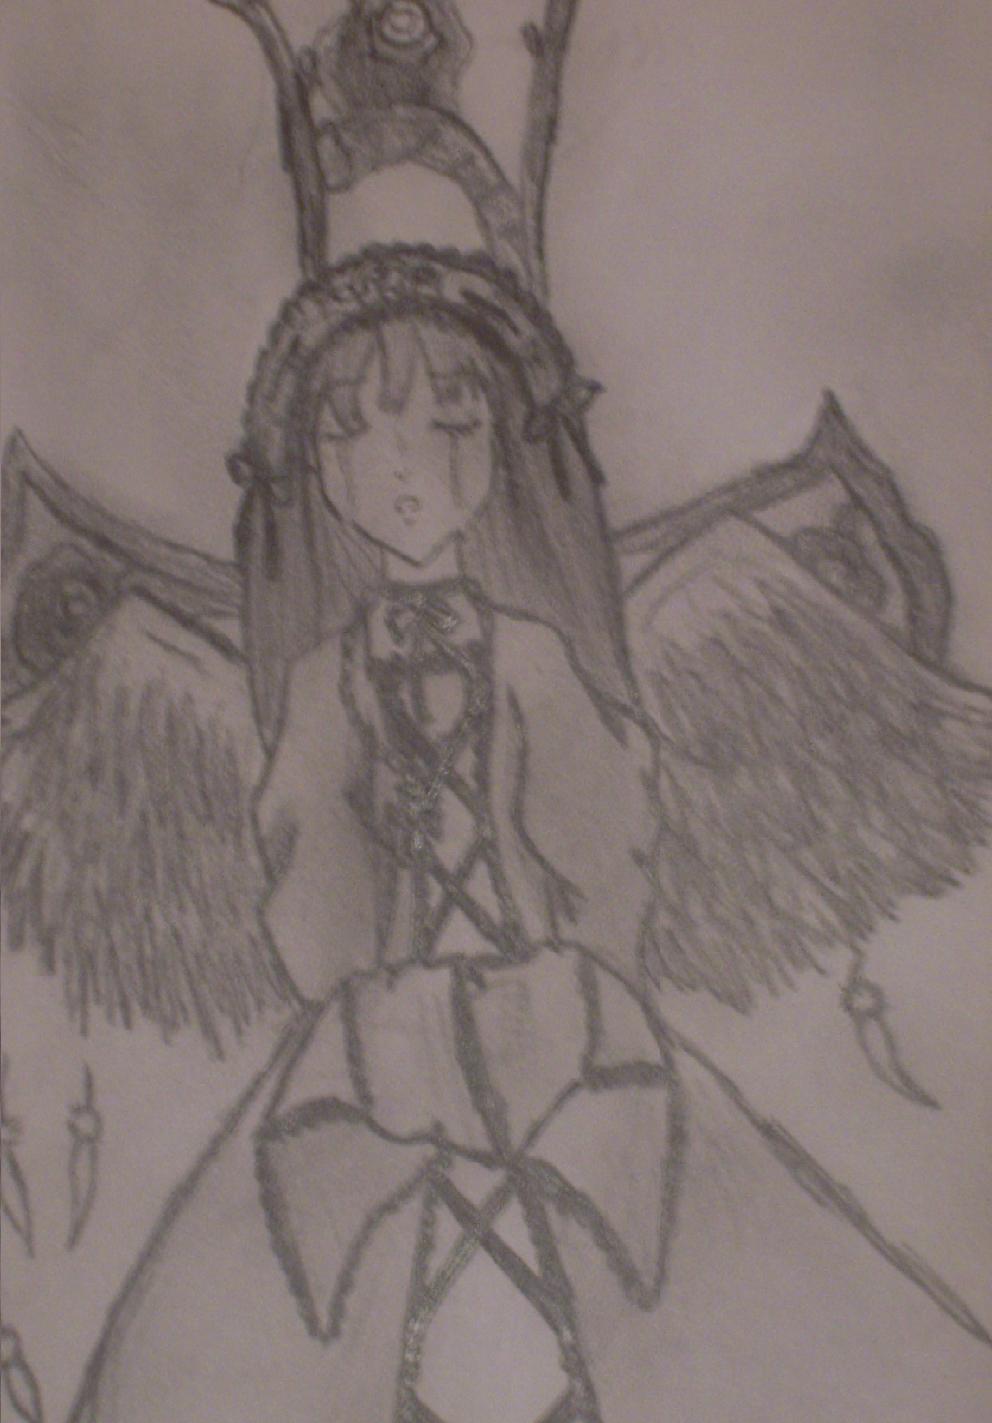 Angel tears by Animeviolingirl